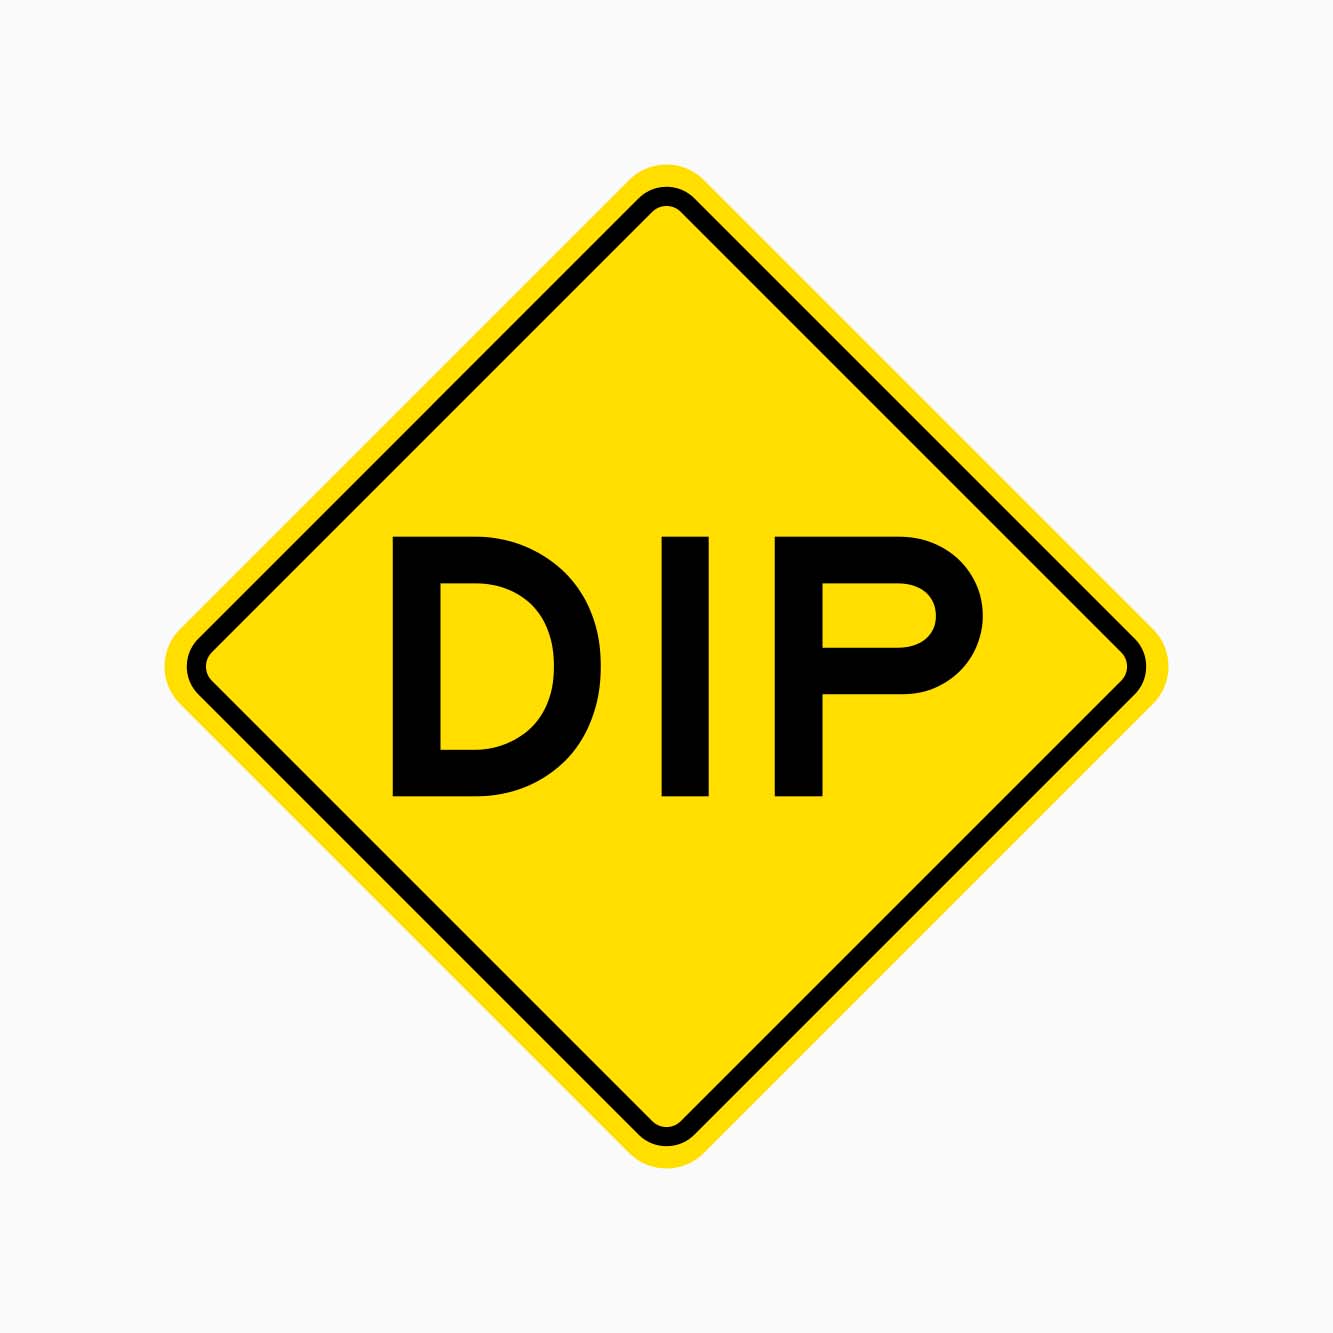 DIP SIGN W5-9 - GET SIGNS